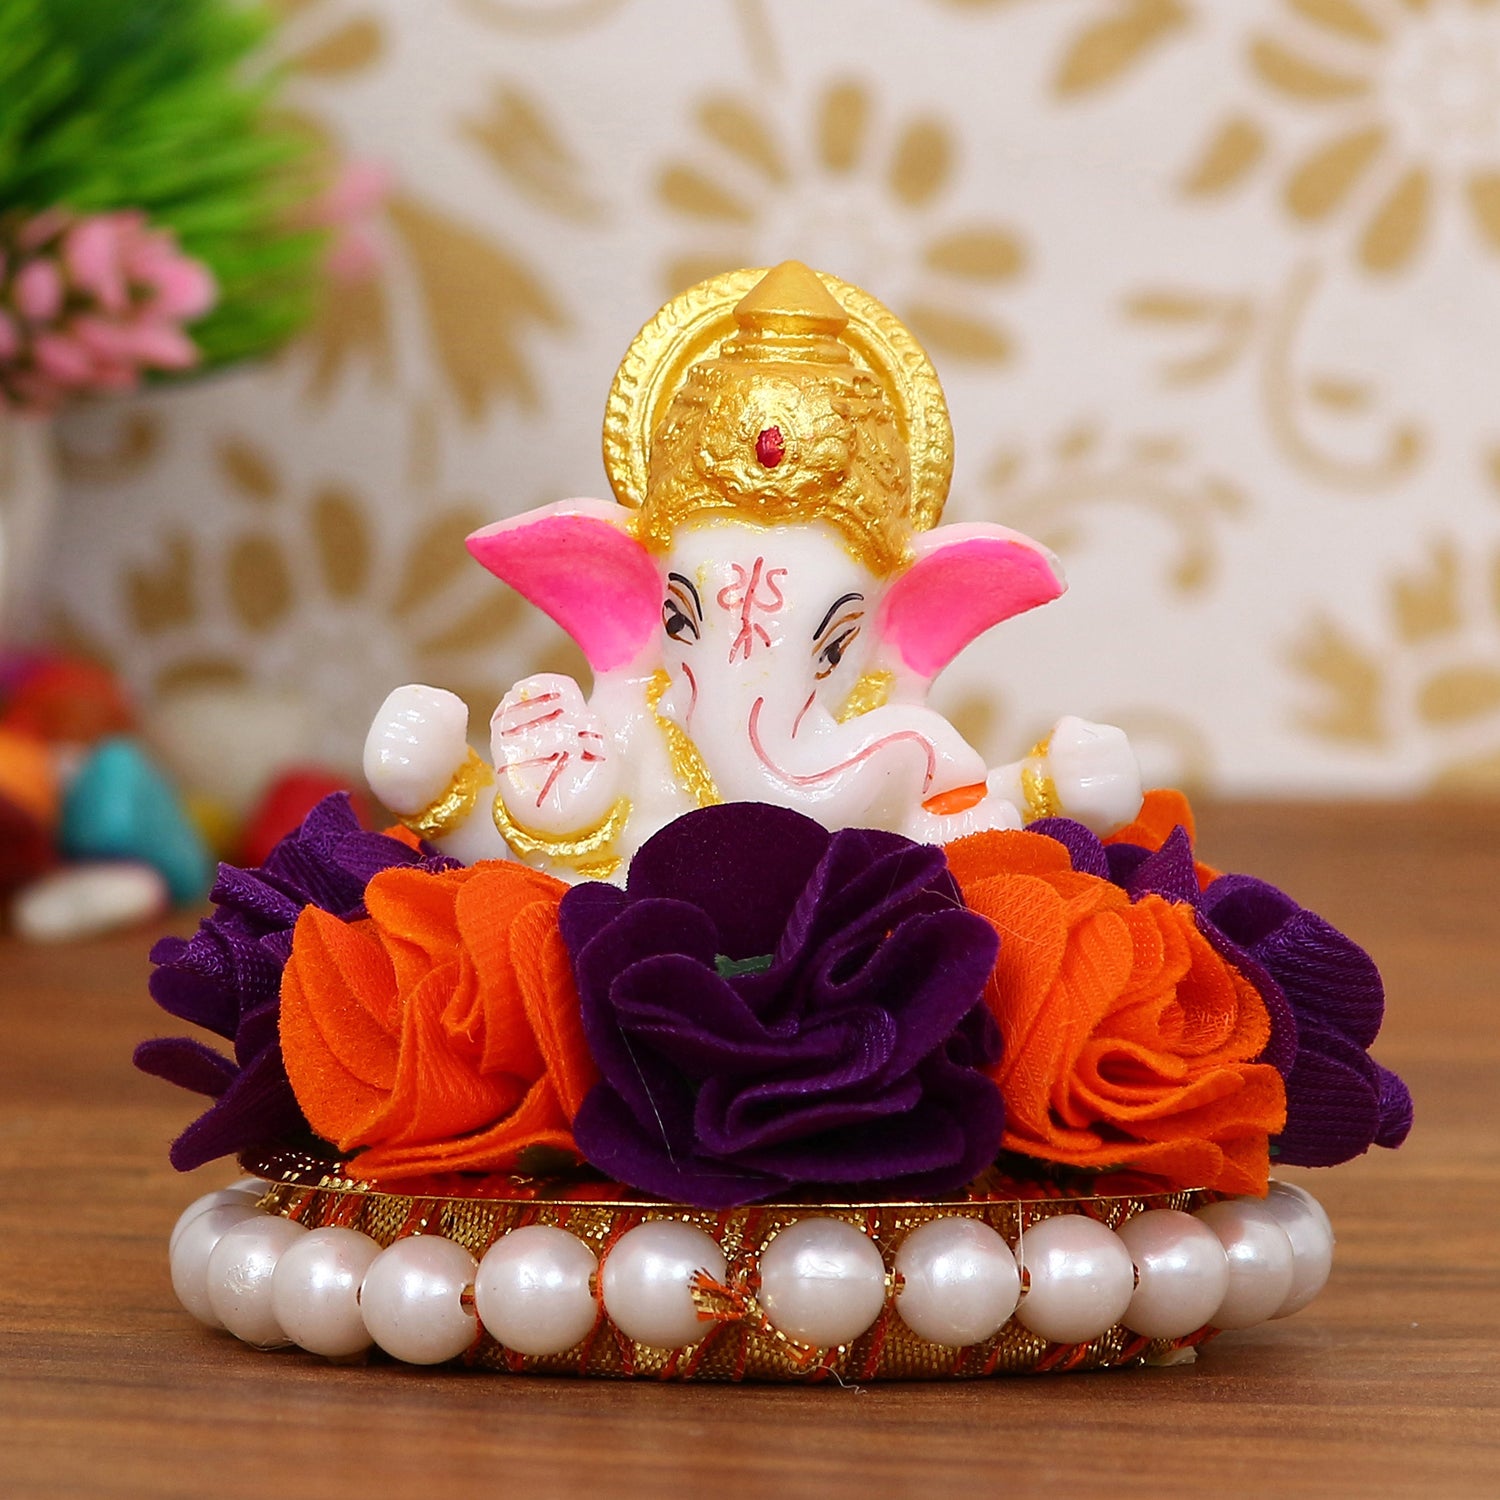 Lord Ganesha Idol On Decorative Handcrafted Orange And Purple Flowers Plate